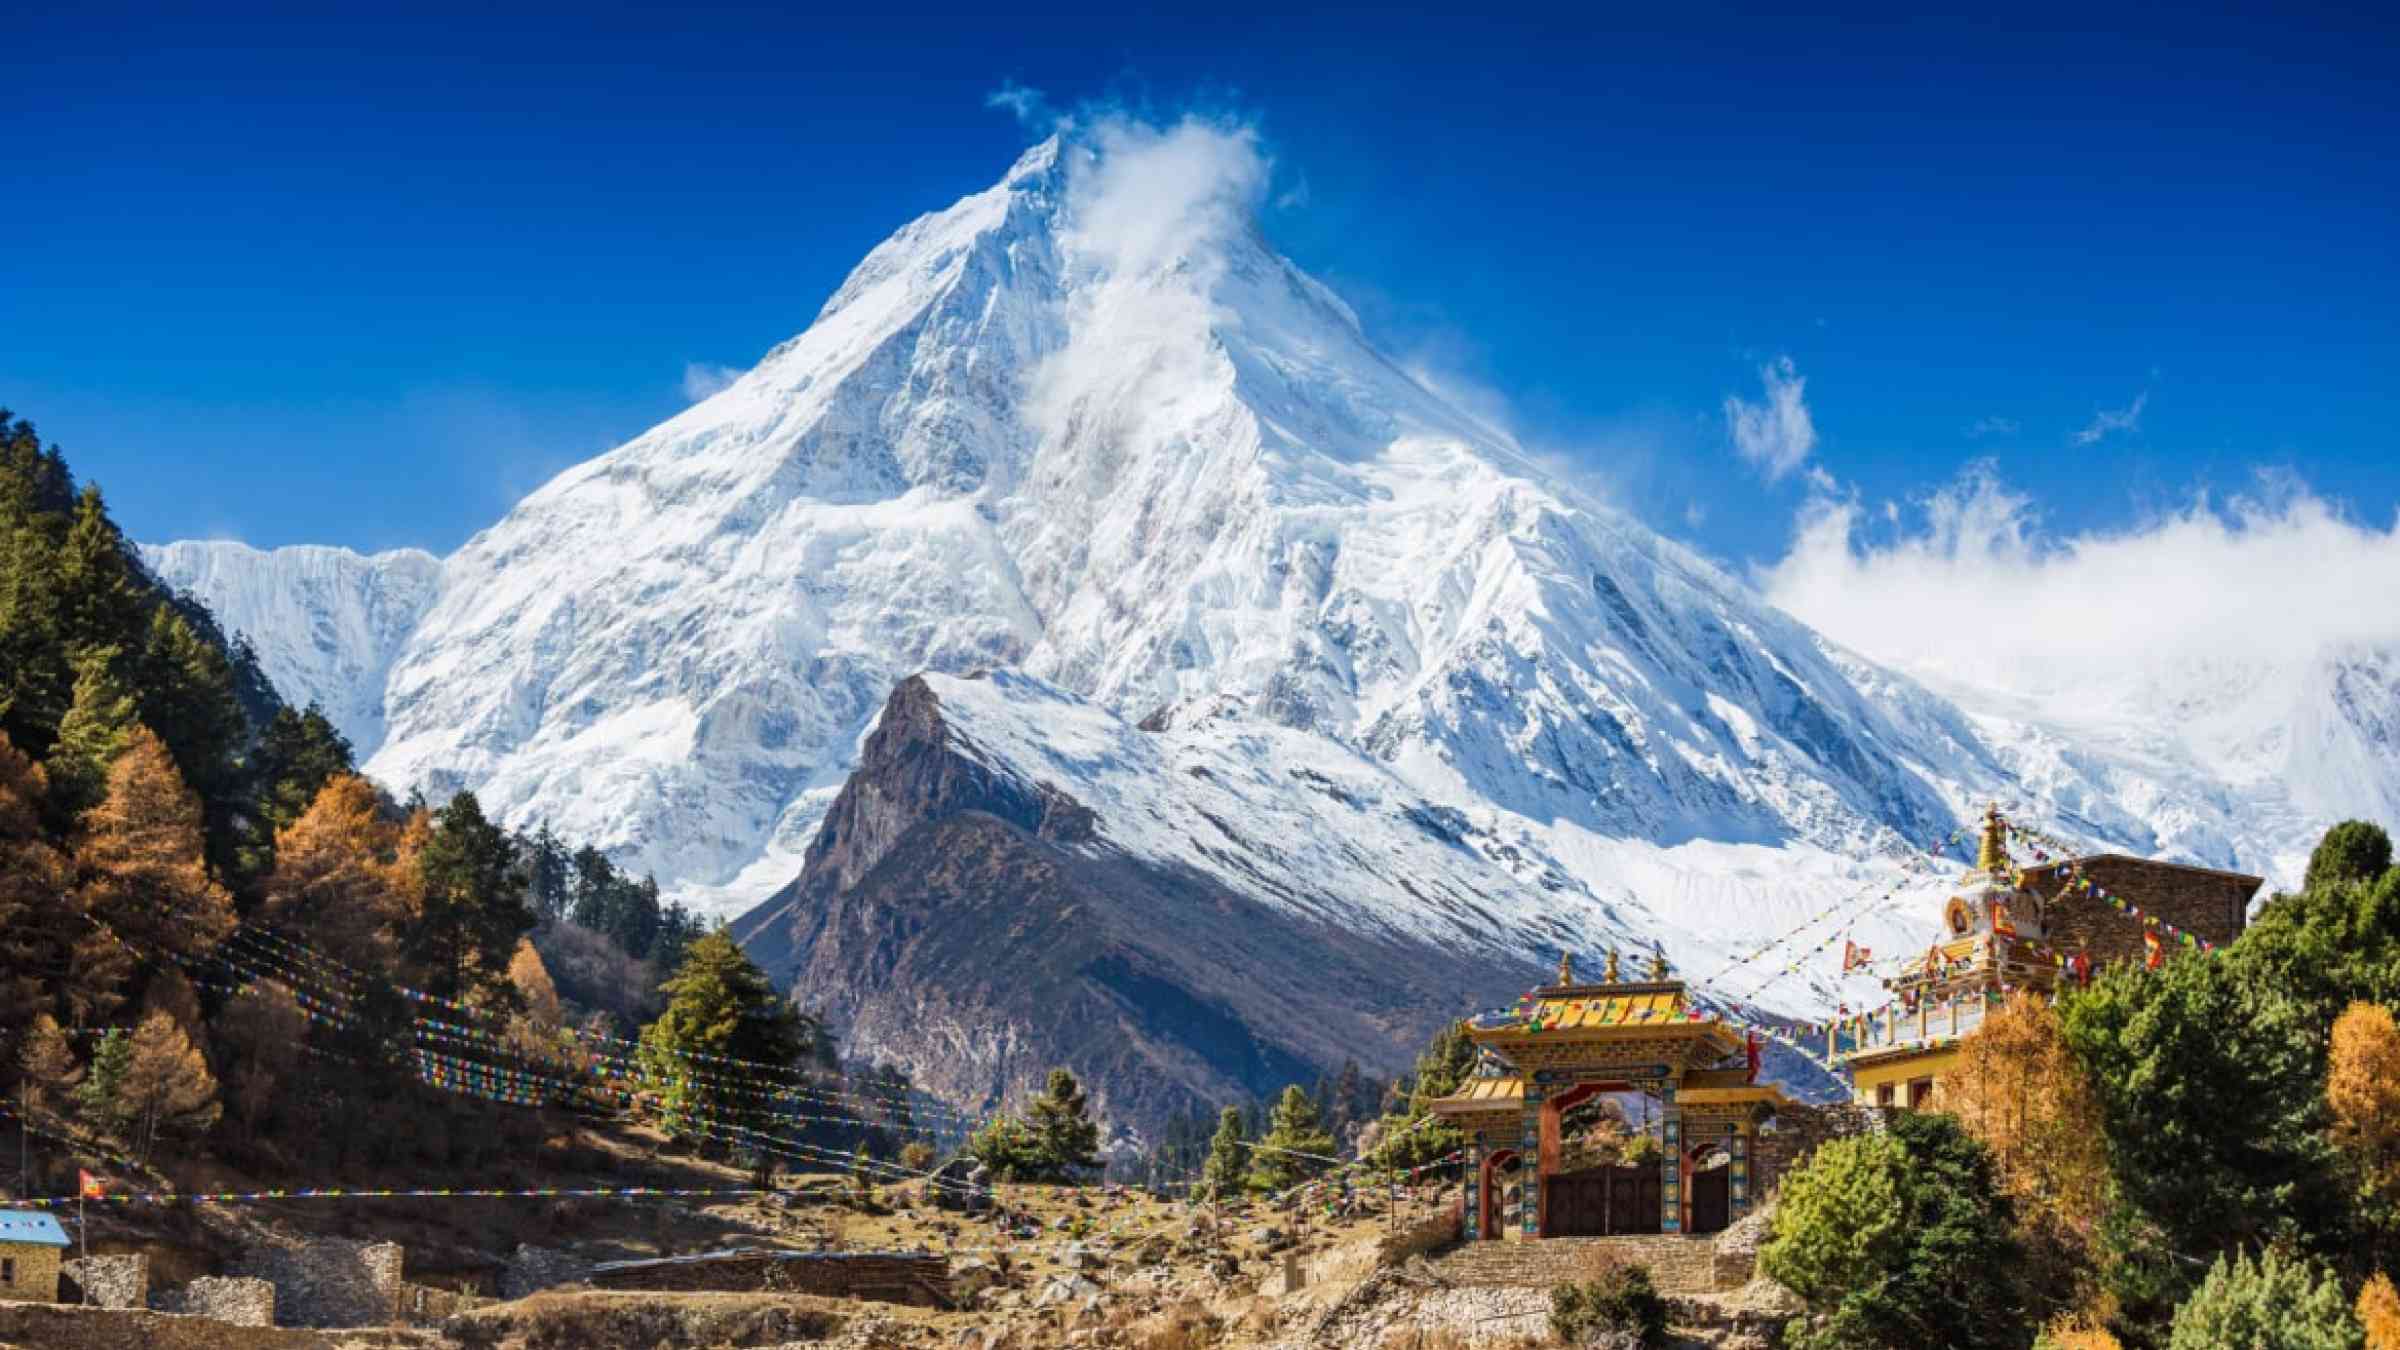 Mt. Manaslu in Himalayas, Nepal.